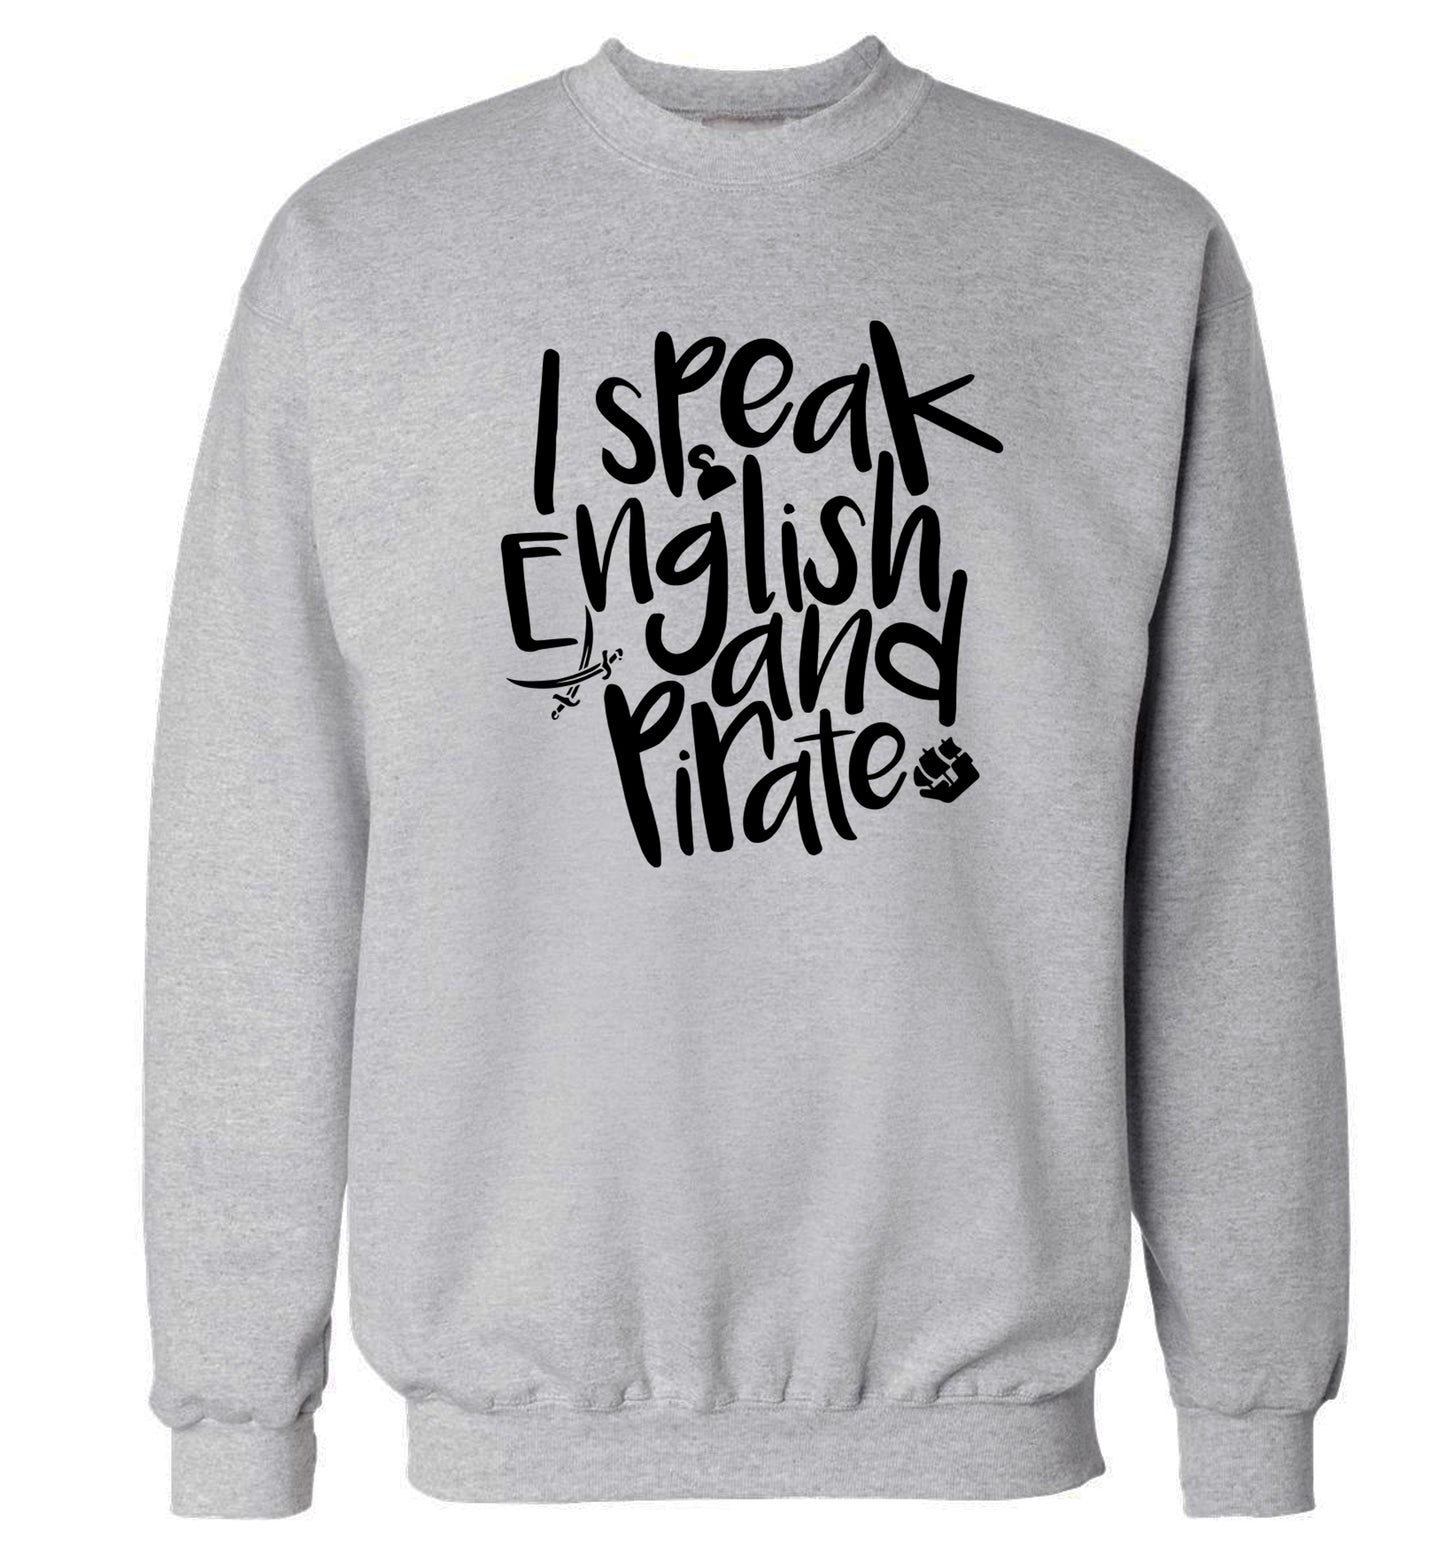 I speak English and pirate Adult's unisex grey Sweater 2XL